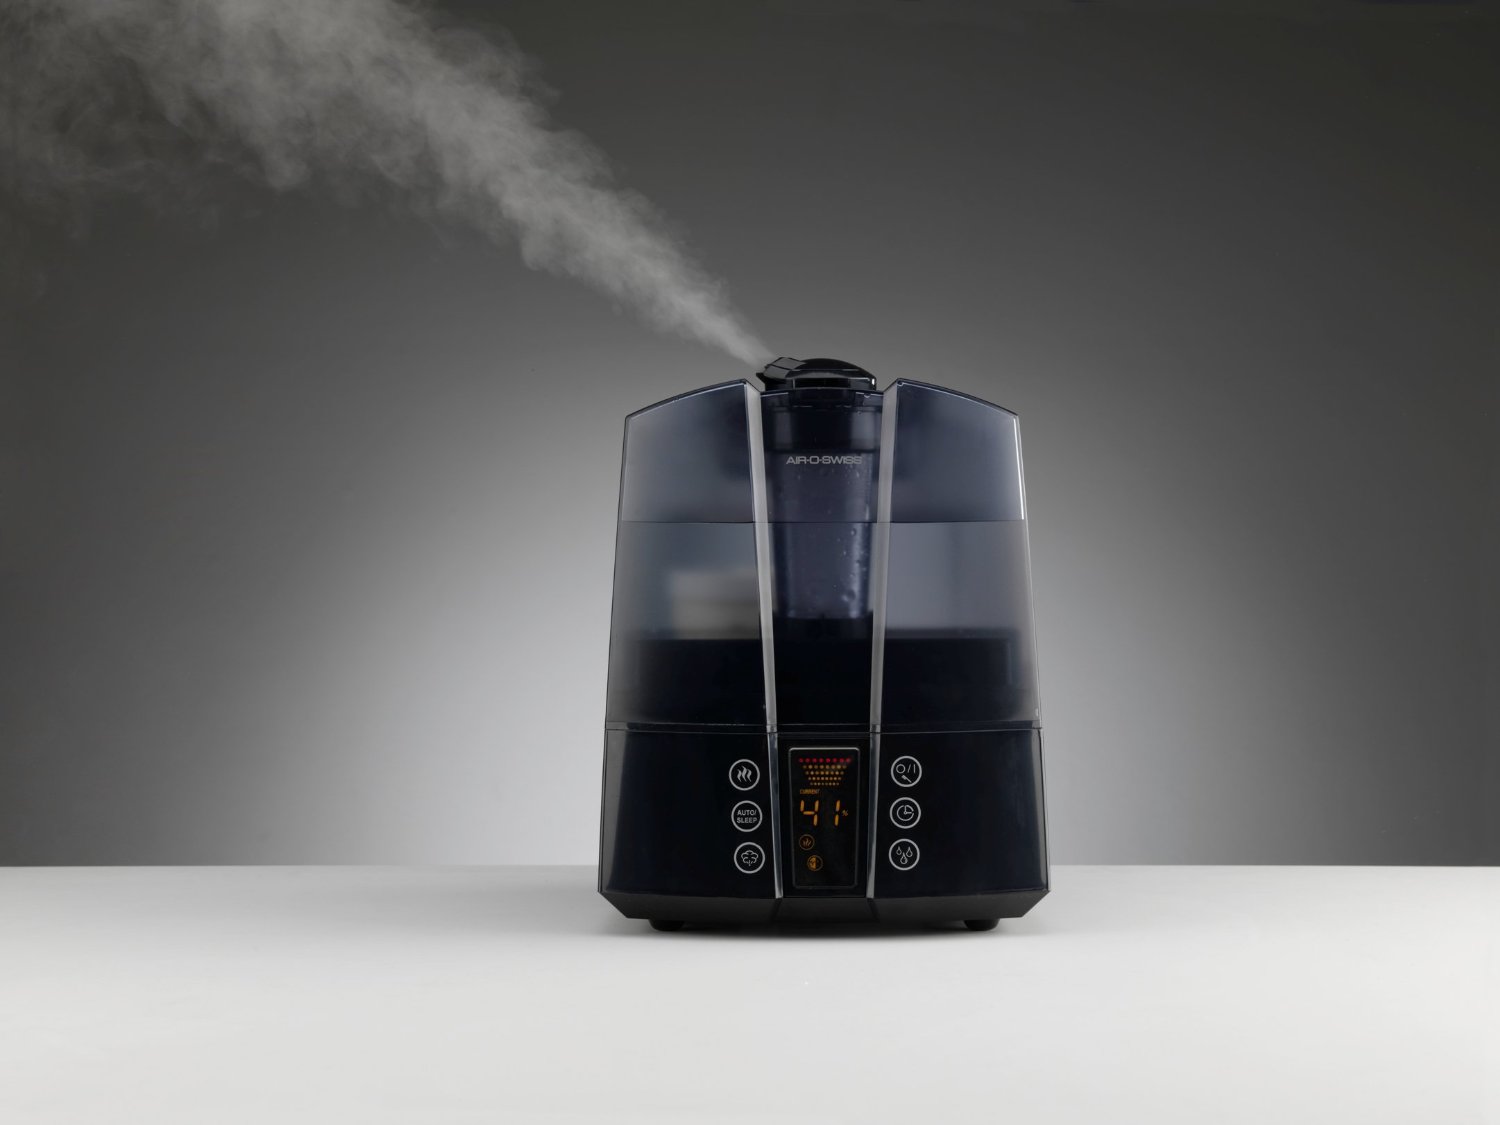 Cool Mist Humifier – beat the heat